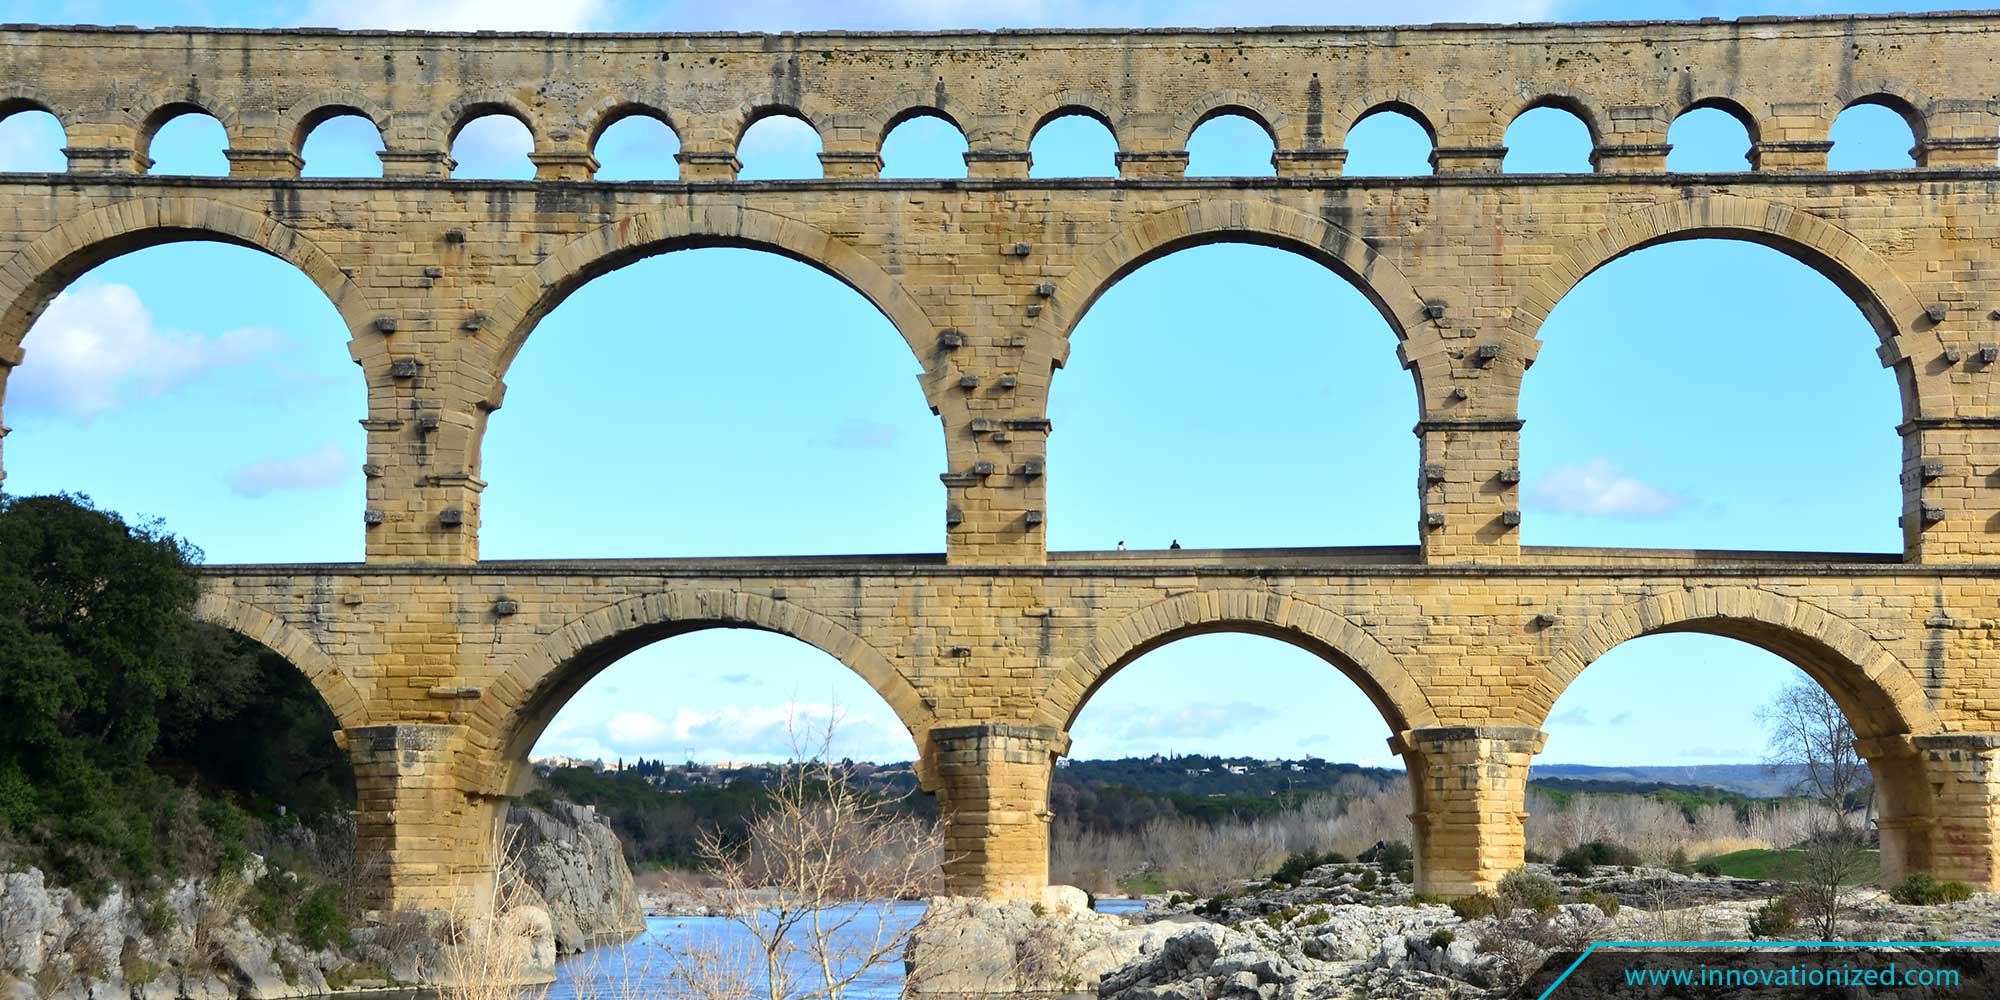 Ancient Roman aquaduct, Pont du Gard.